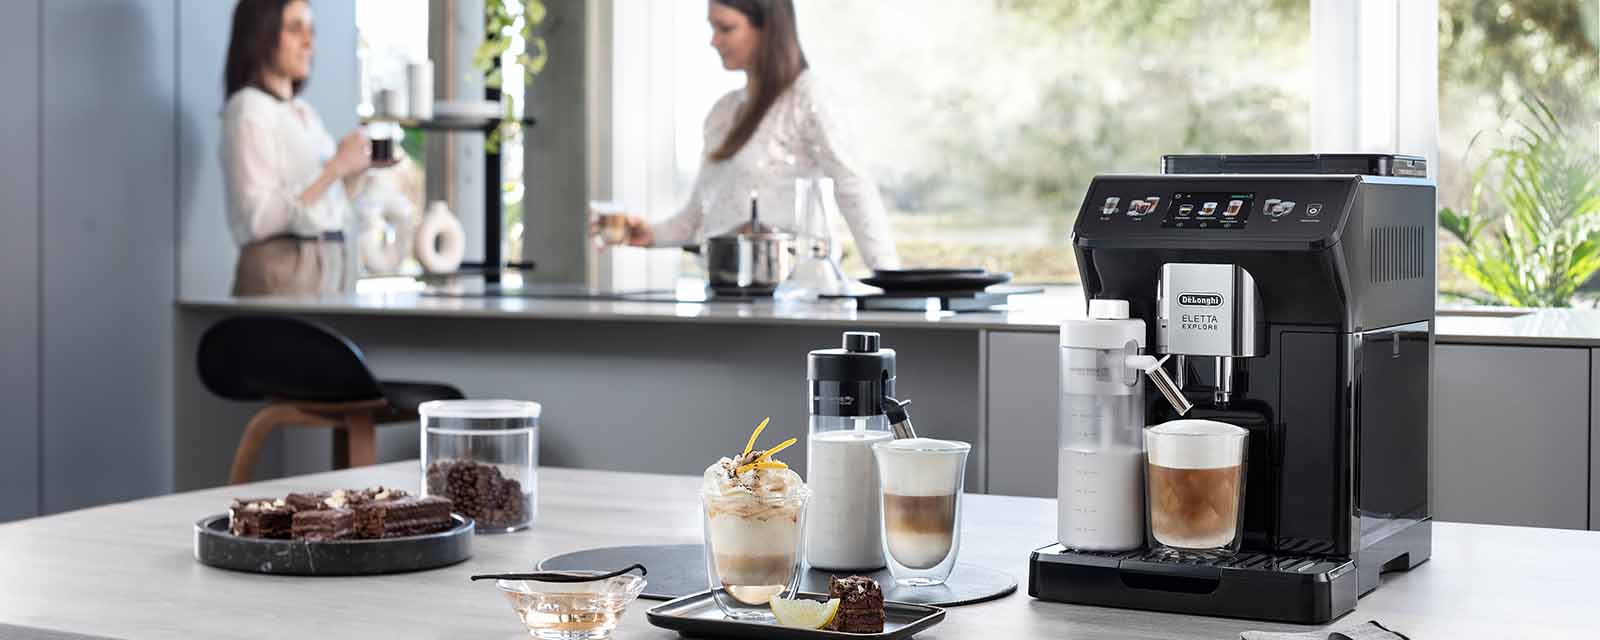 https://www.harveynorman.com.au/blog/assets/DeLonghi-Eletta-Explore-Coffee-Machine-review.jpg